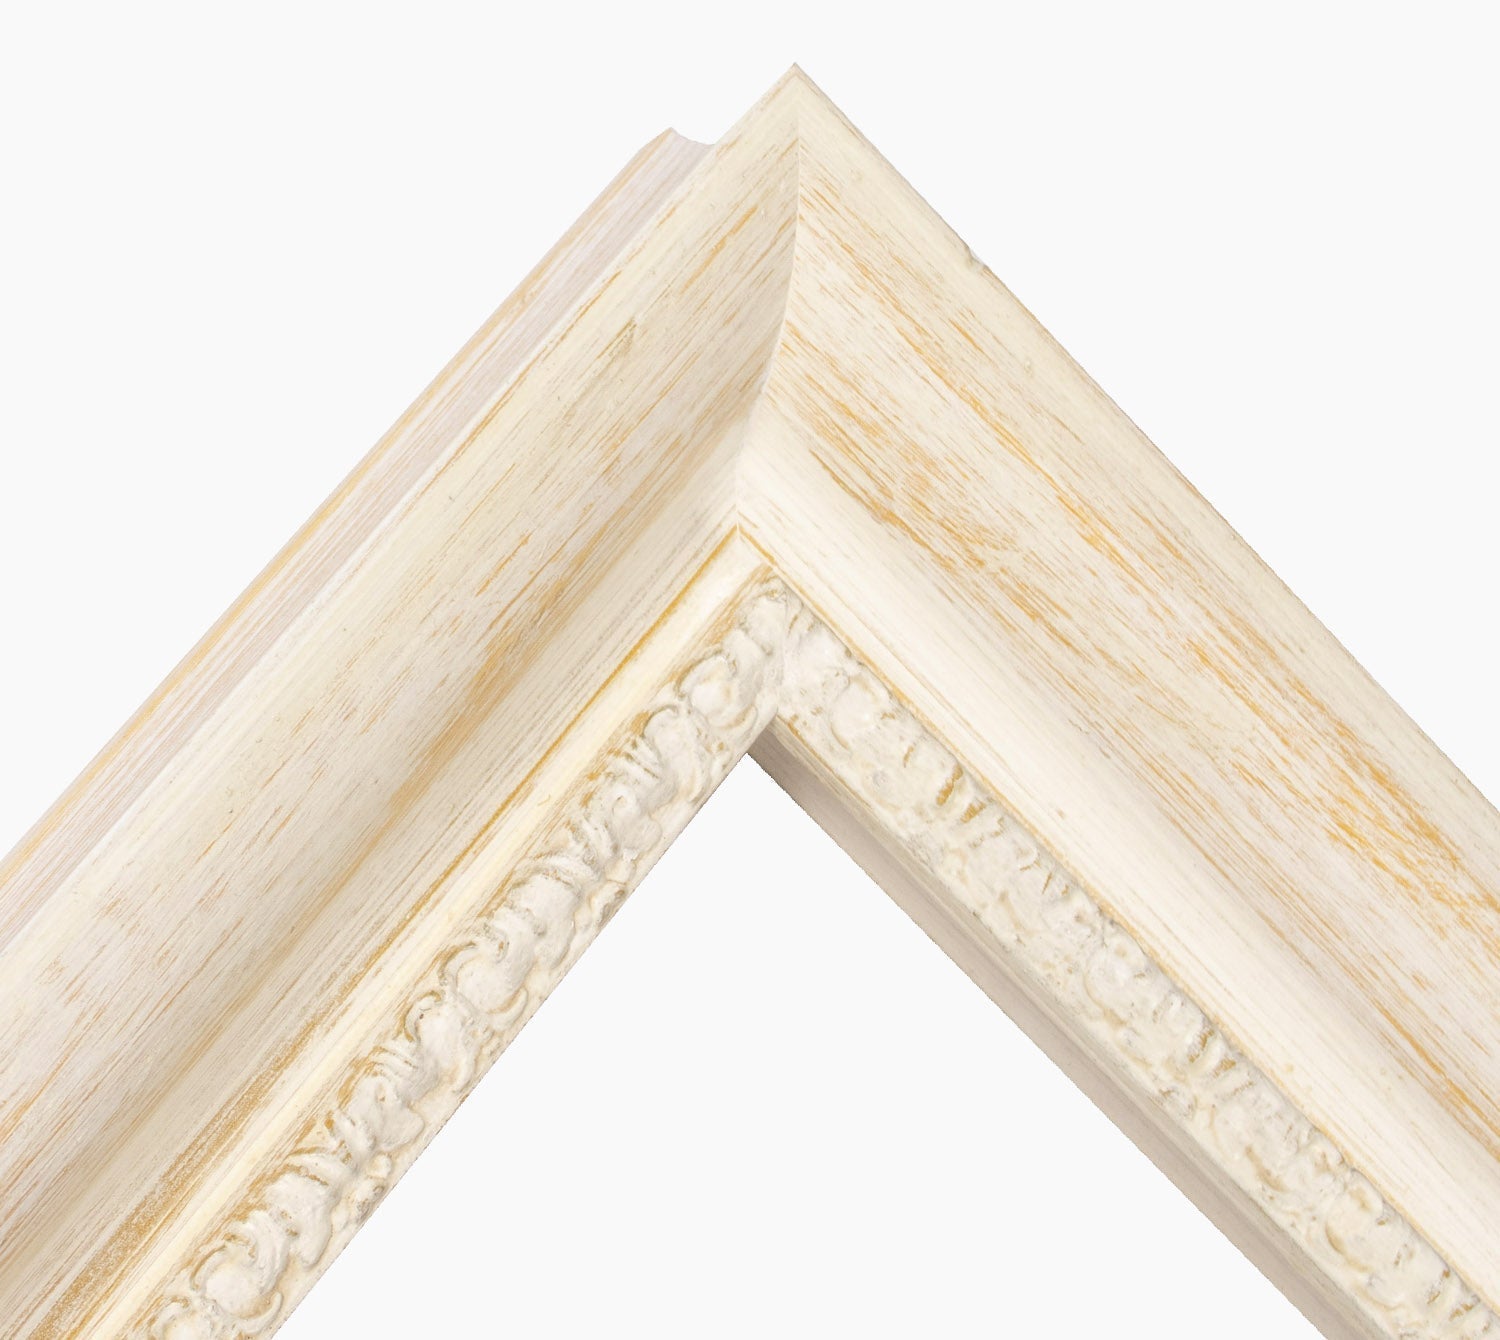 430.915 cadre en bois blanc fond ocre Largeur 65 mm - Hauteur 55 mm Lombarda cornici S.n.c.